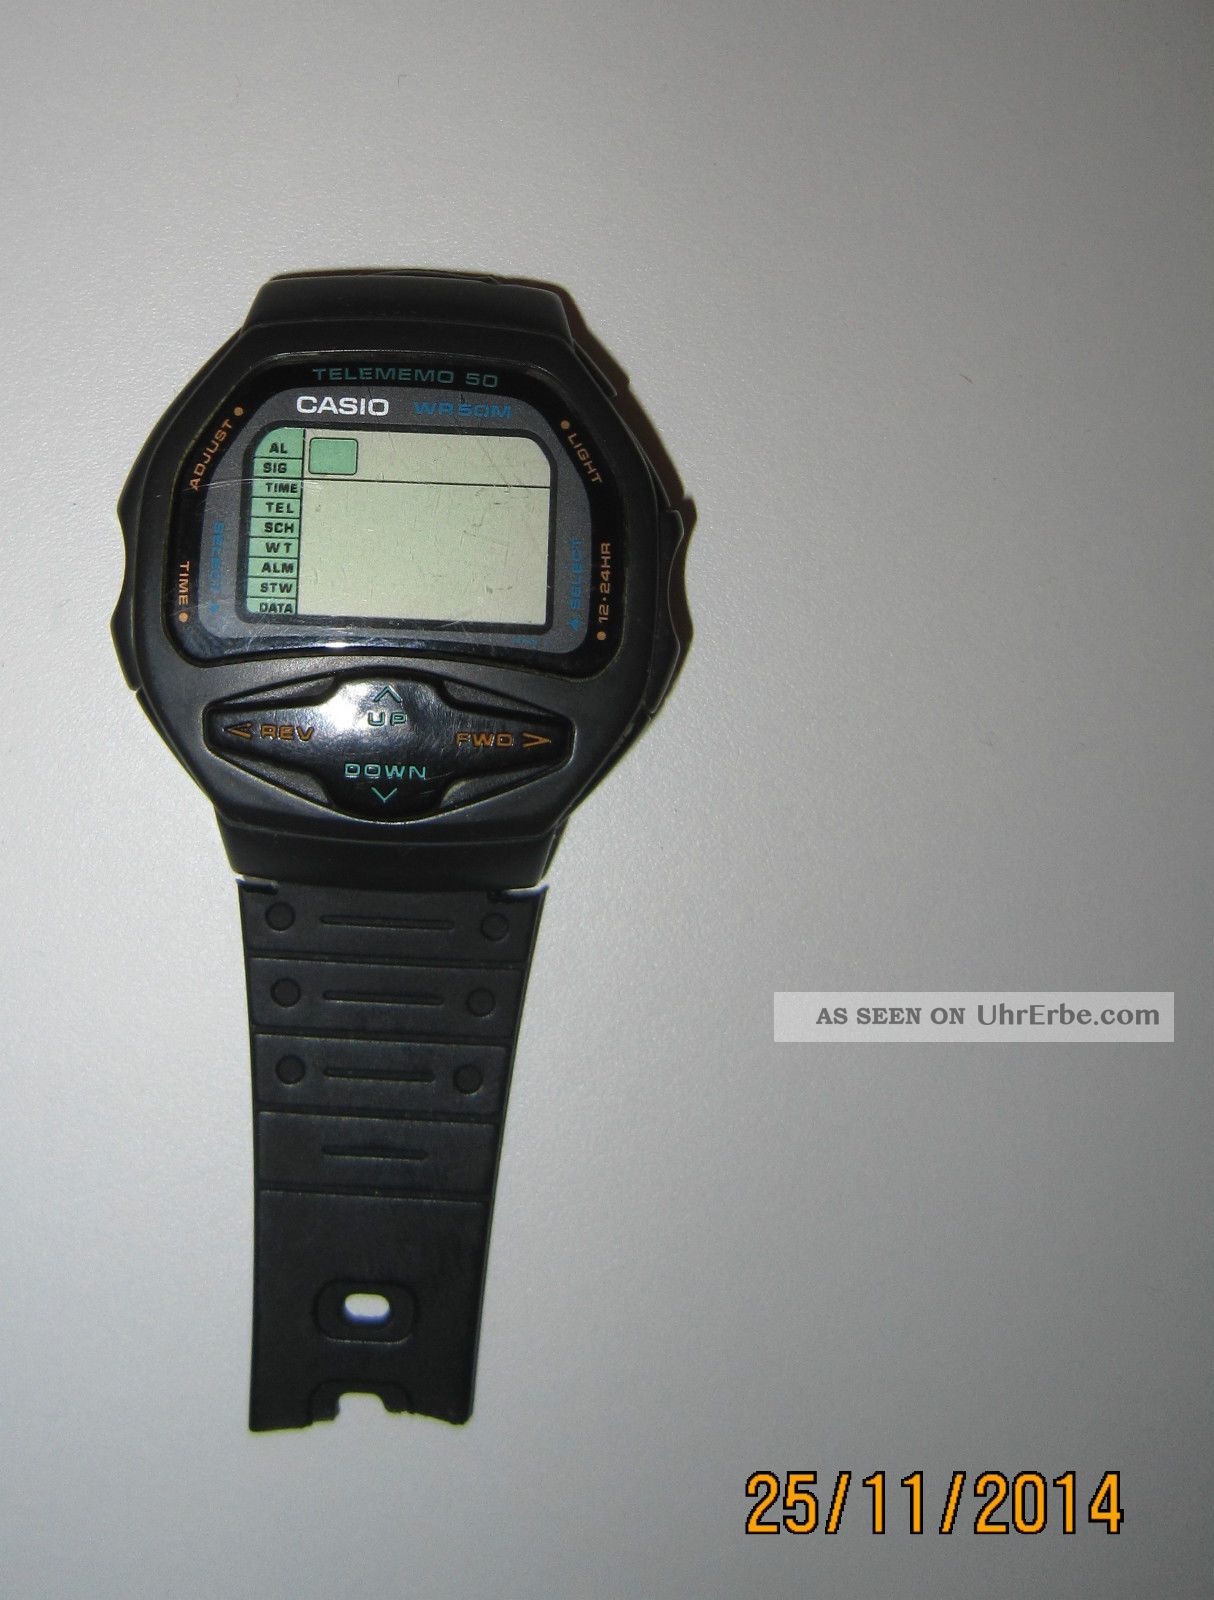 Seltene Casio Dbf - 50m Armbanduhren Bild